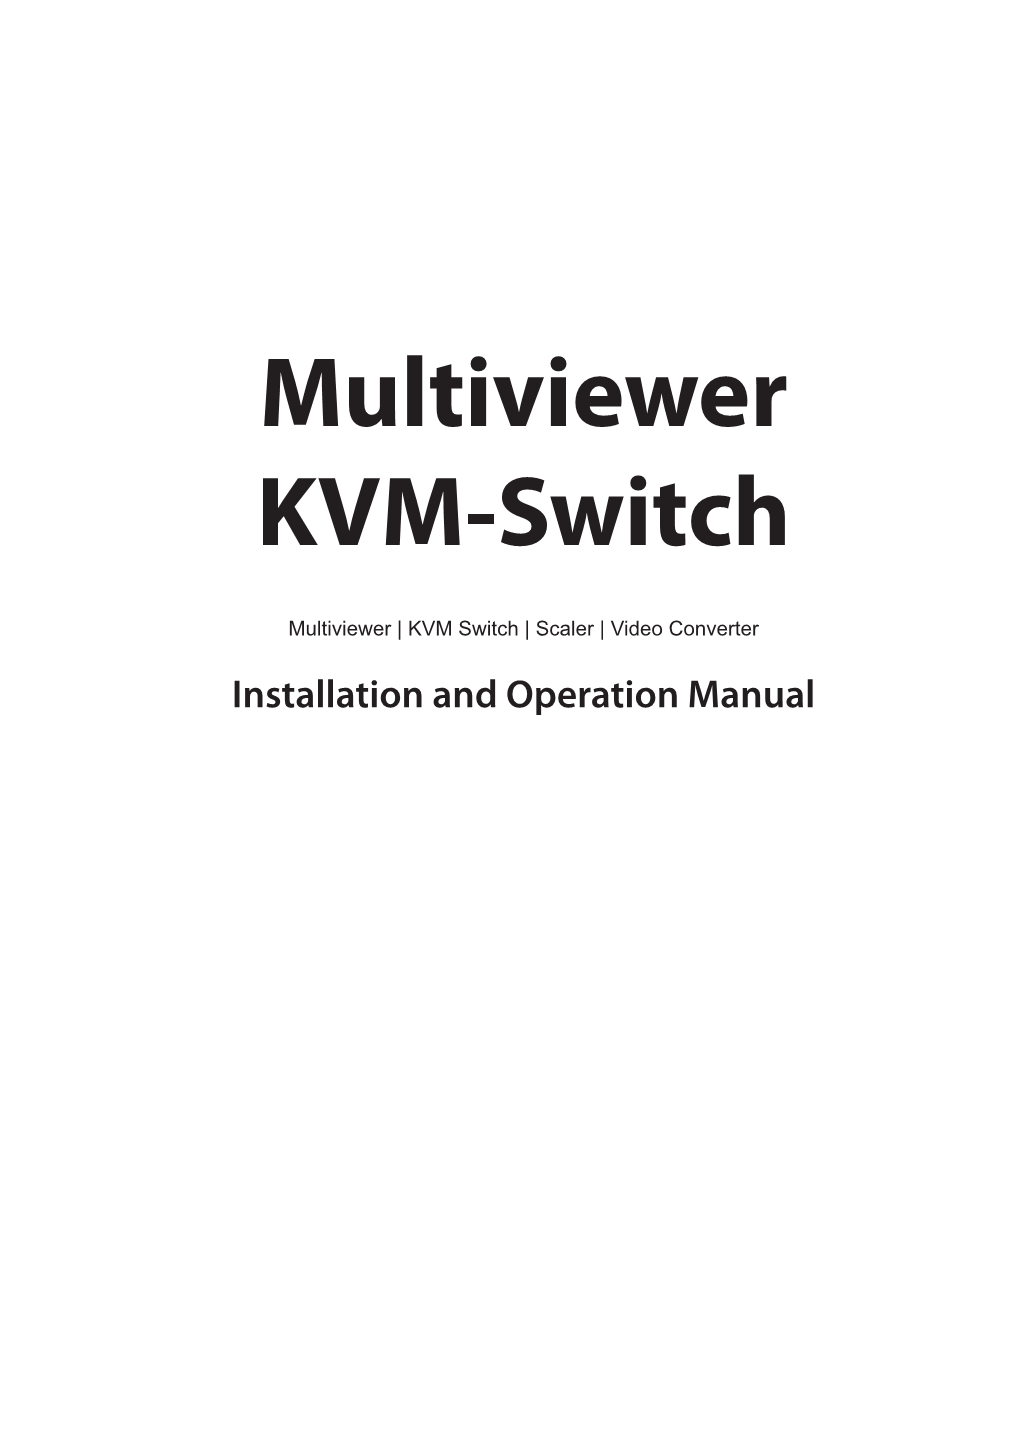 Multiviewer KVM-Switch